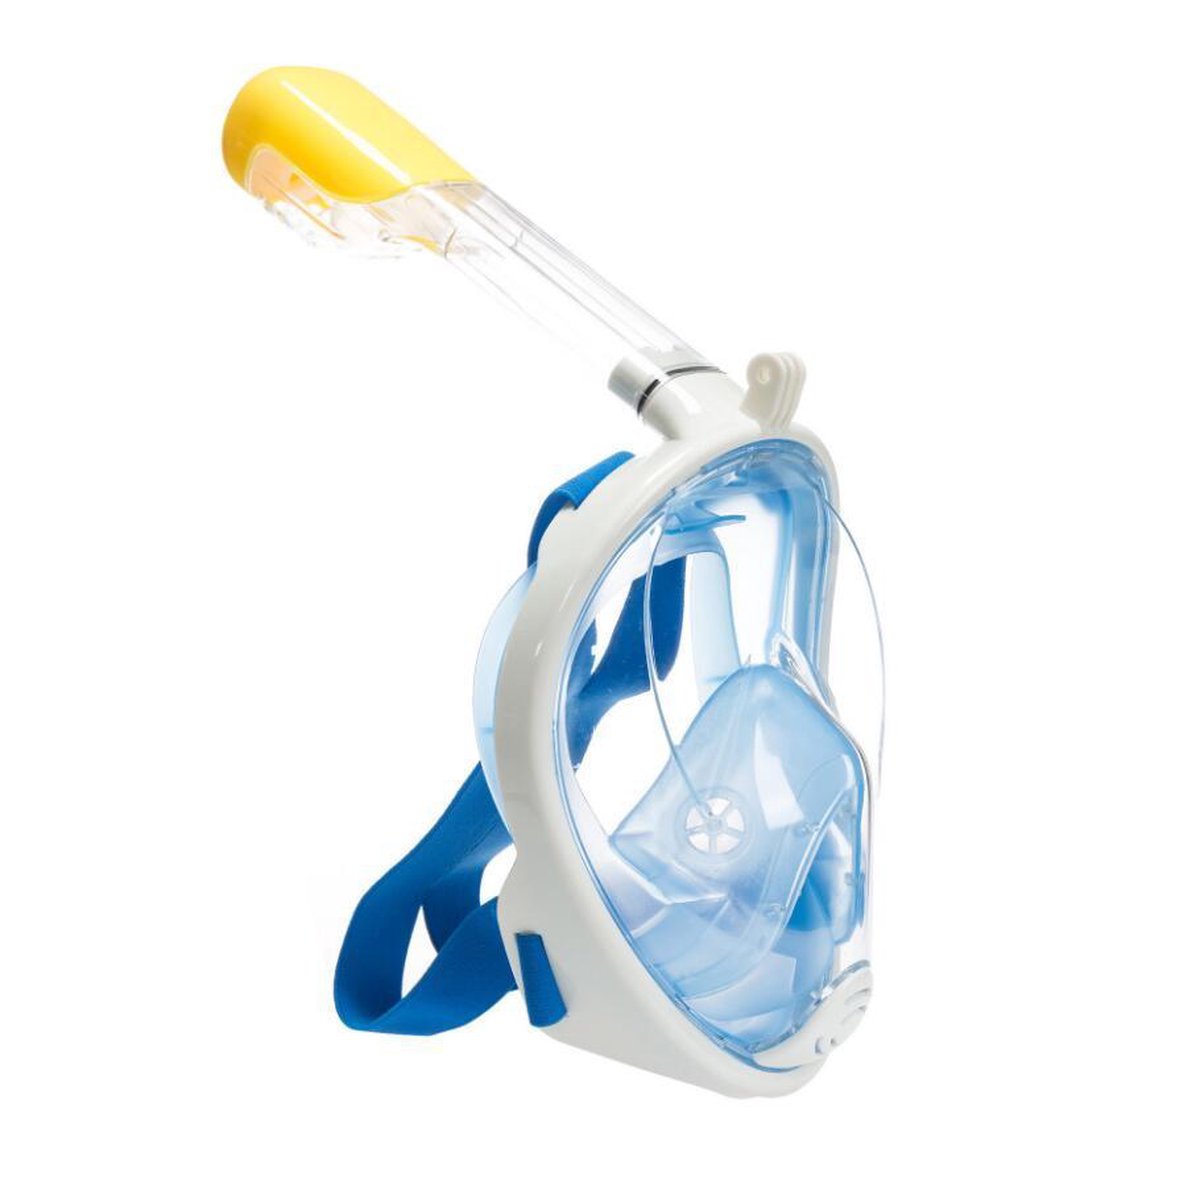 Snorkelmasker Blauw L/XL - Full Face duikbril masker met snorkel (Large/XL)